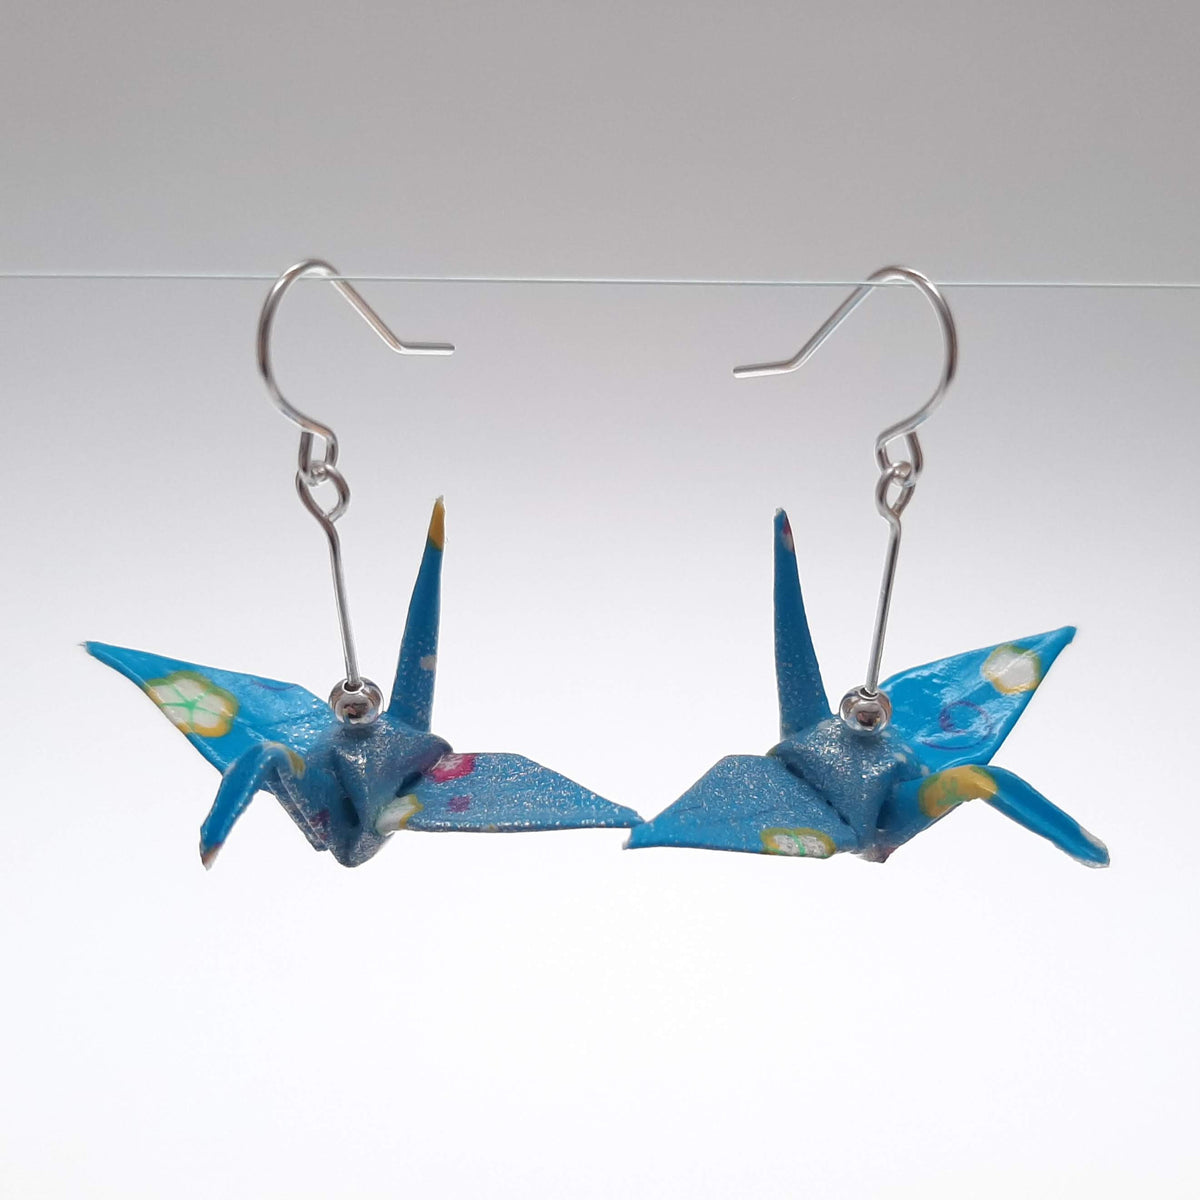 Origami Crane Earrings – Japanese Papercraft